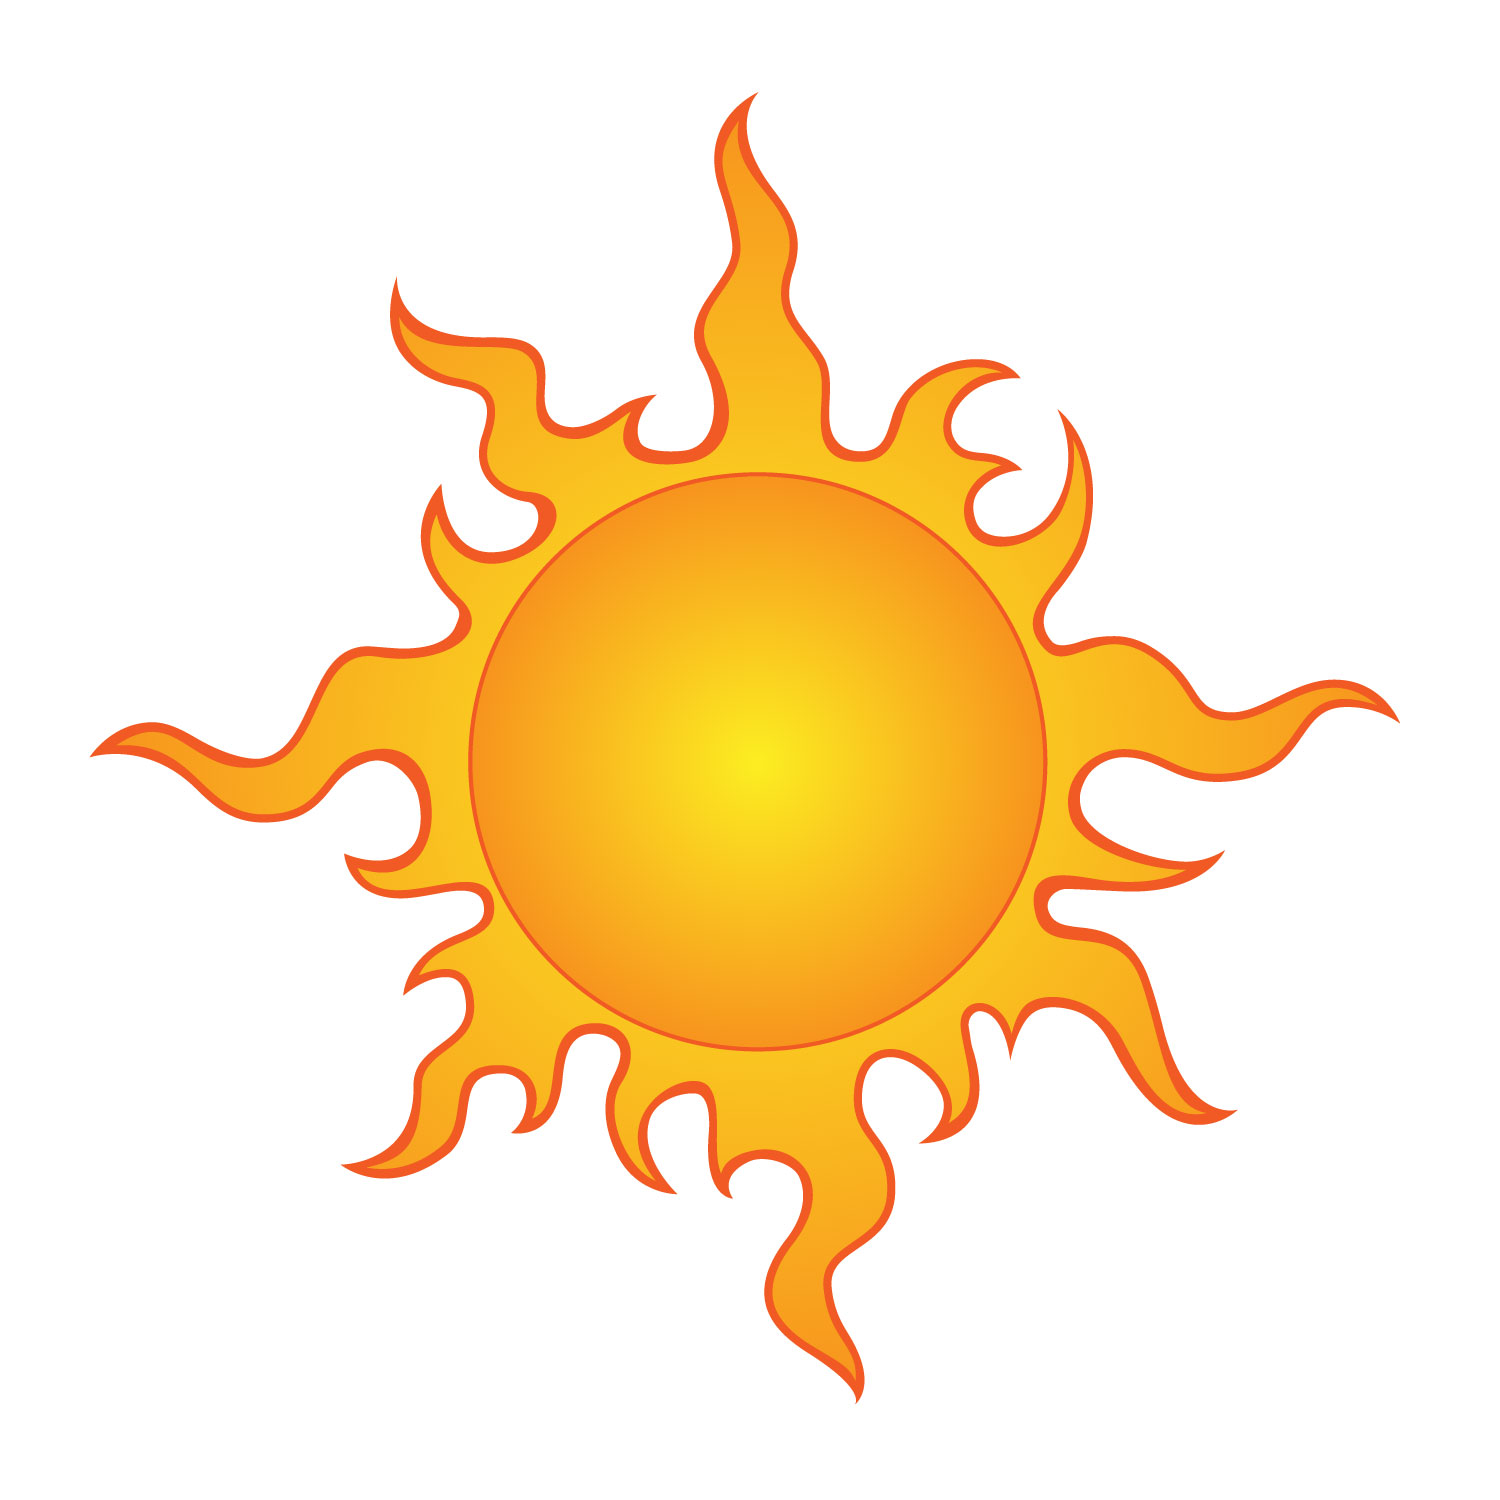 Sun Graphic Images